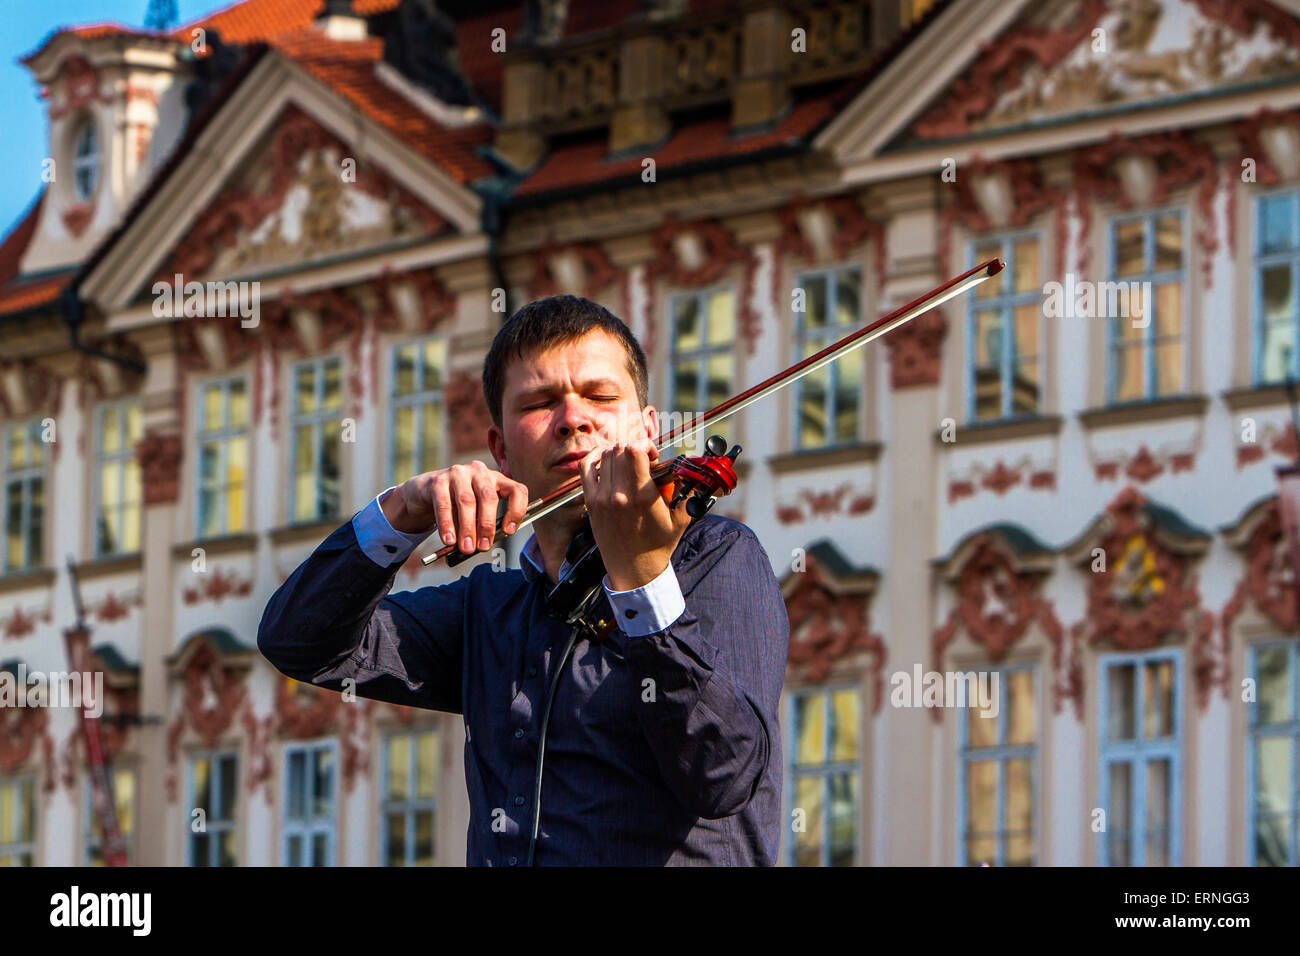 Violinist in Prague Stock Photo